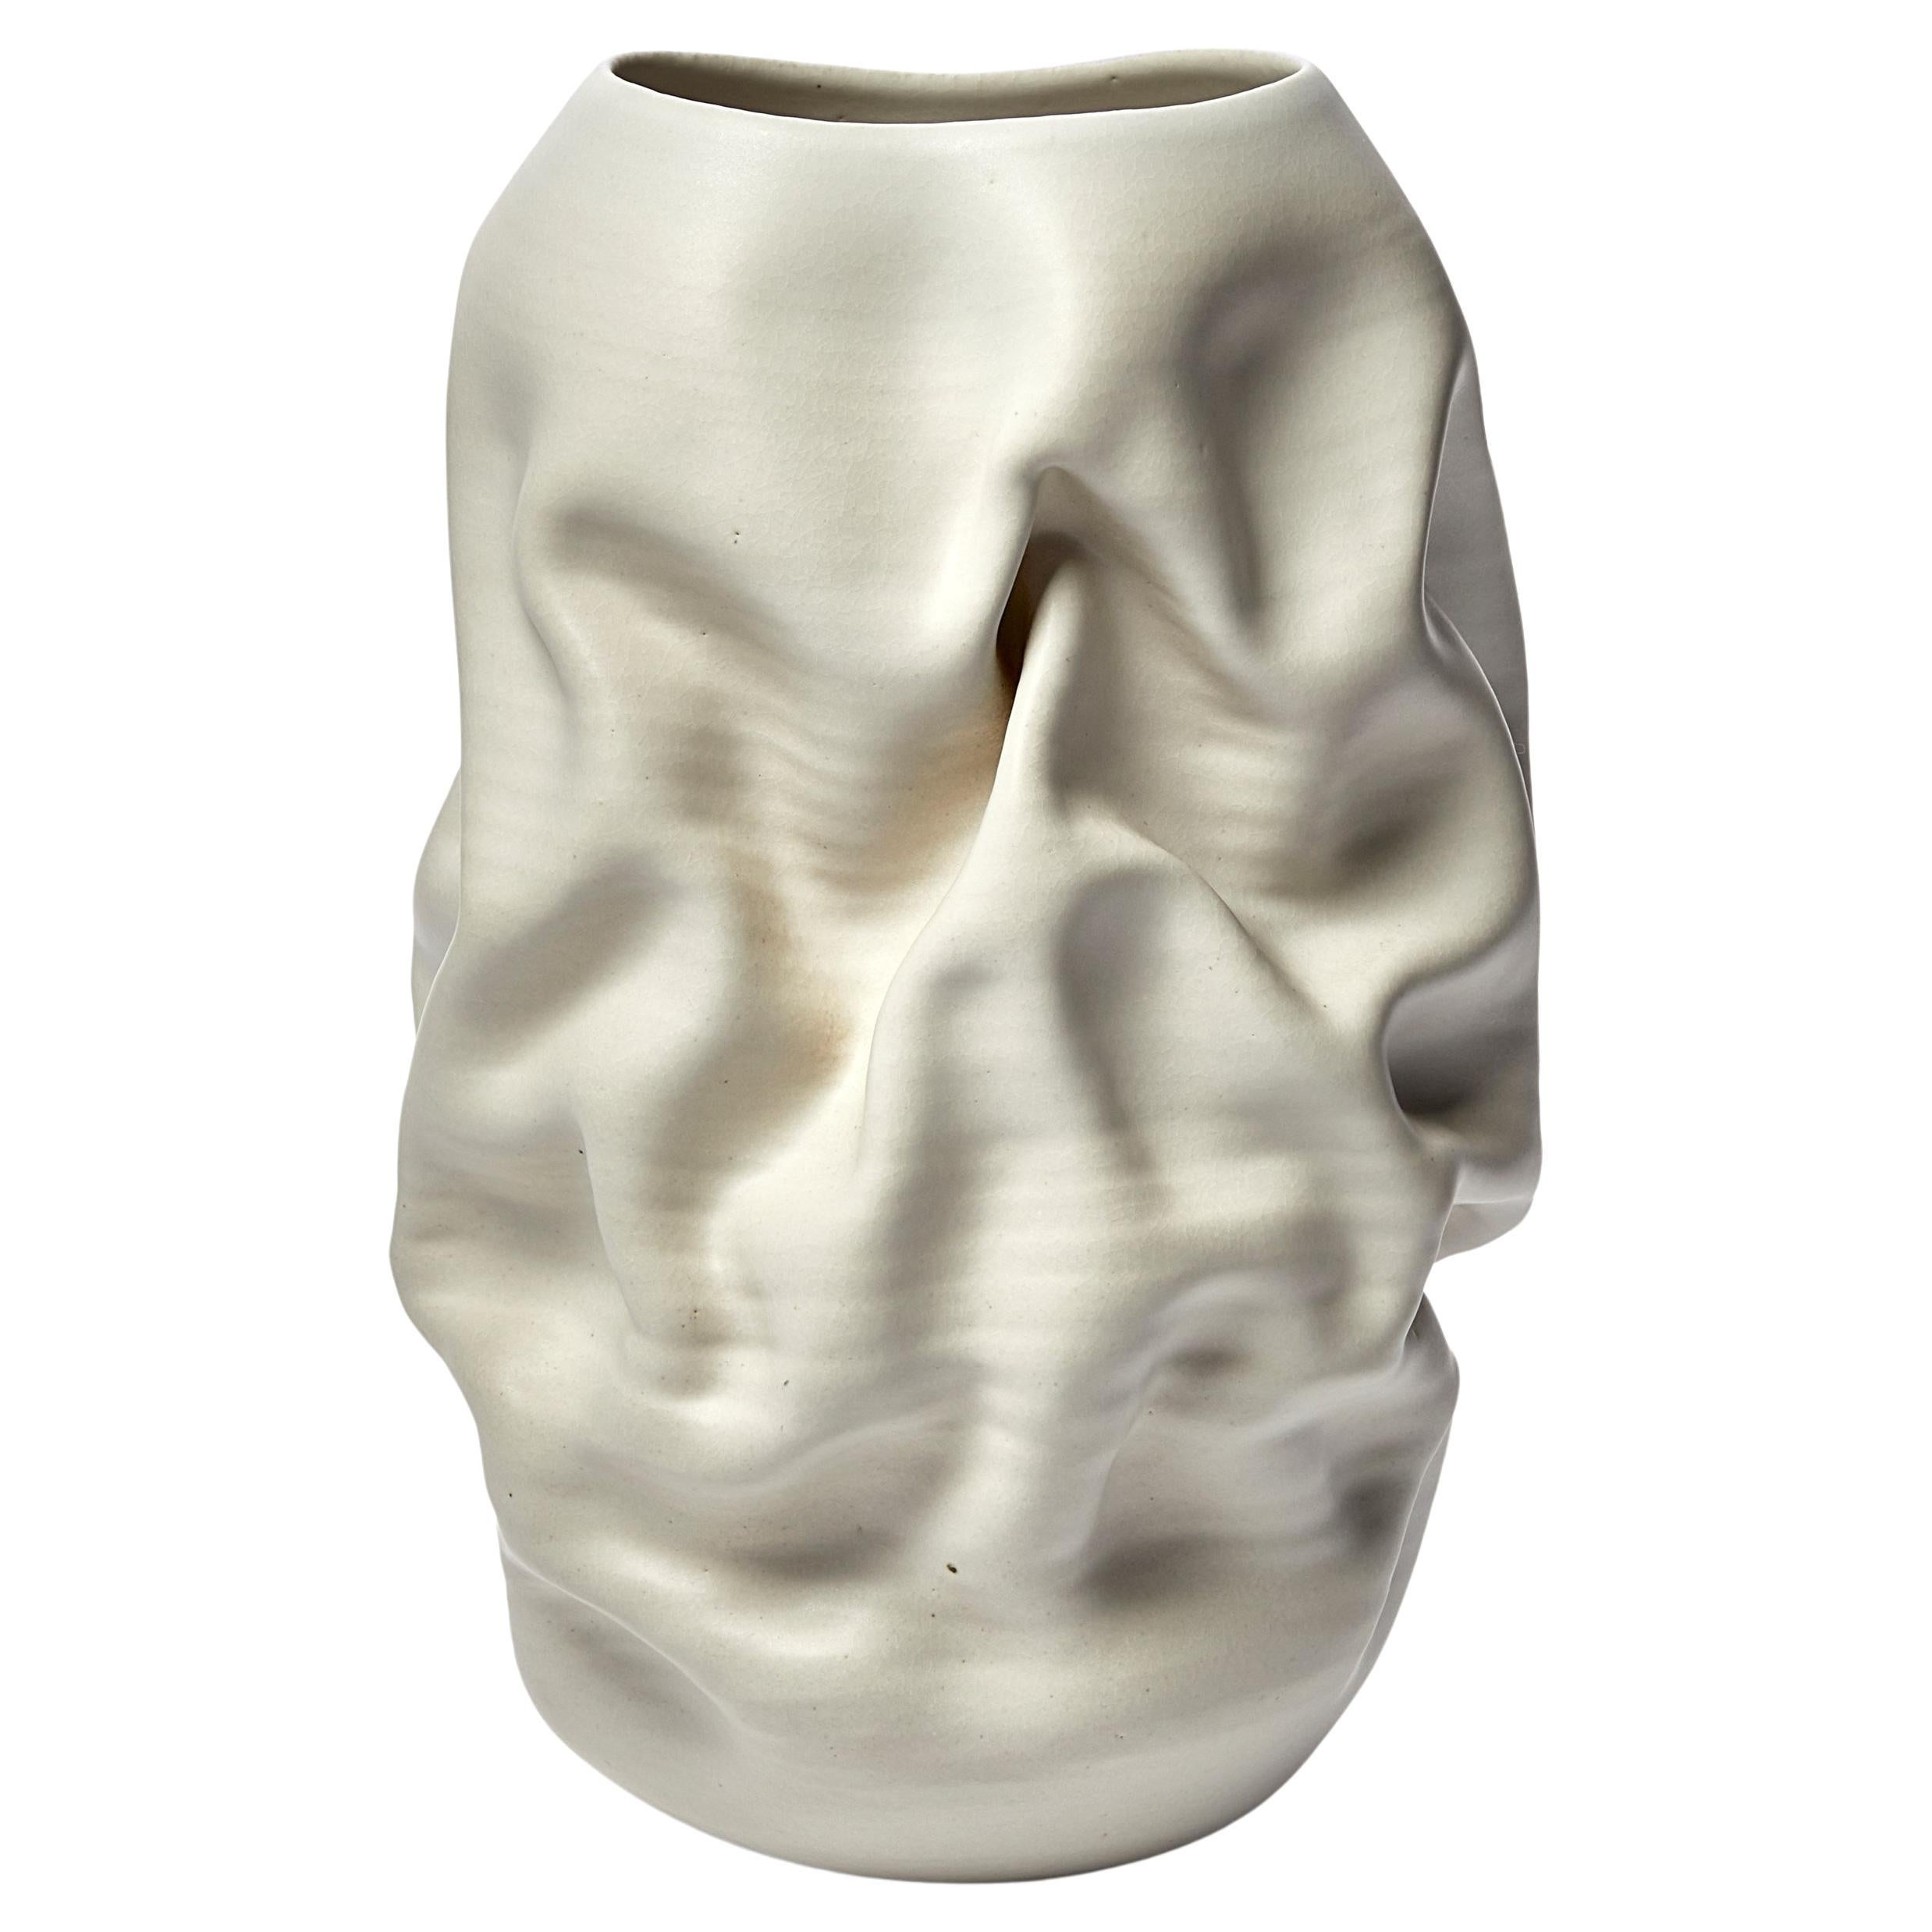 Tall Crumpled Form No 118, white ceramic vessel by Nicholas Arroyave-Portela